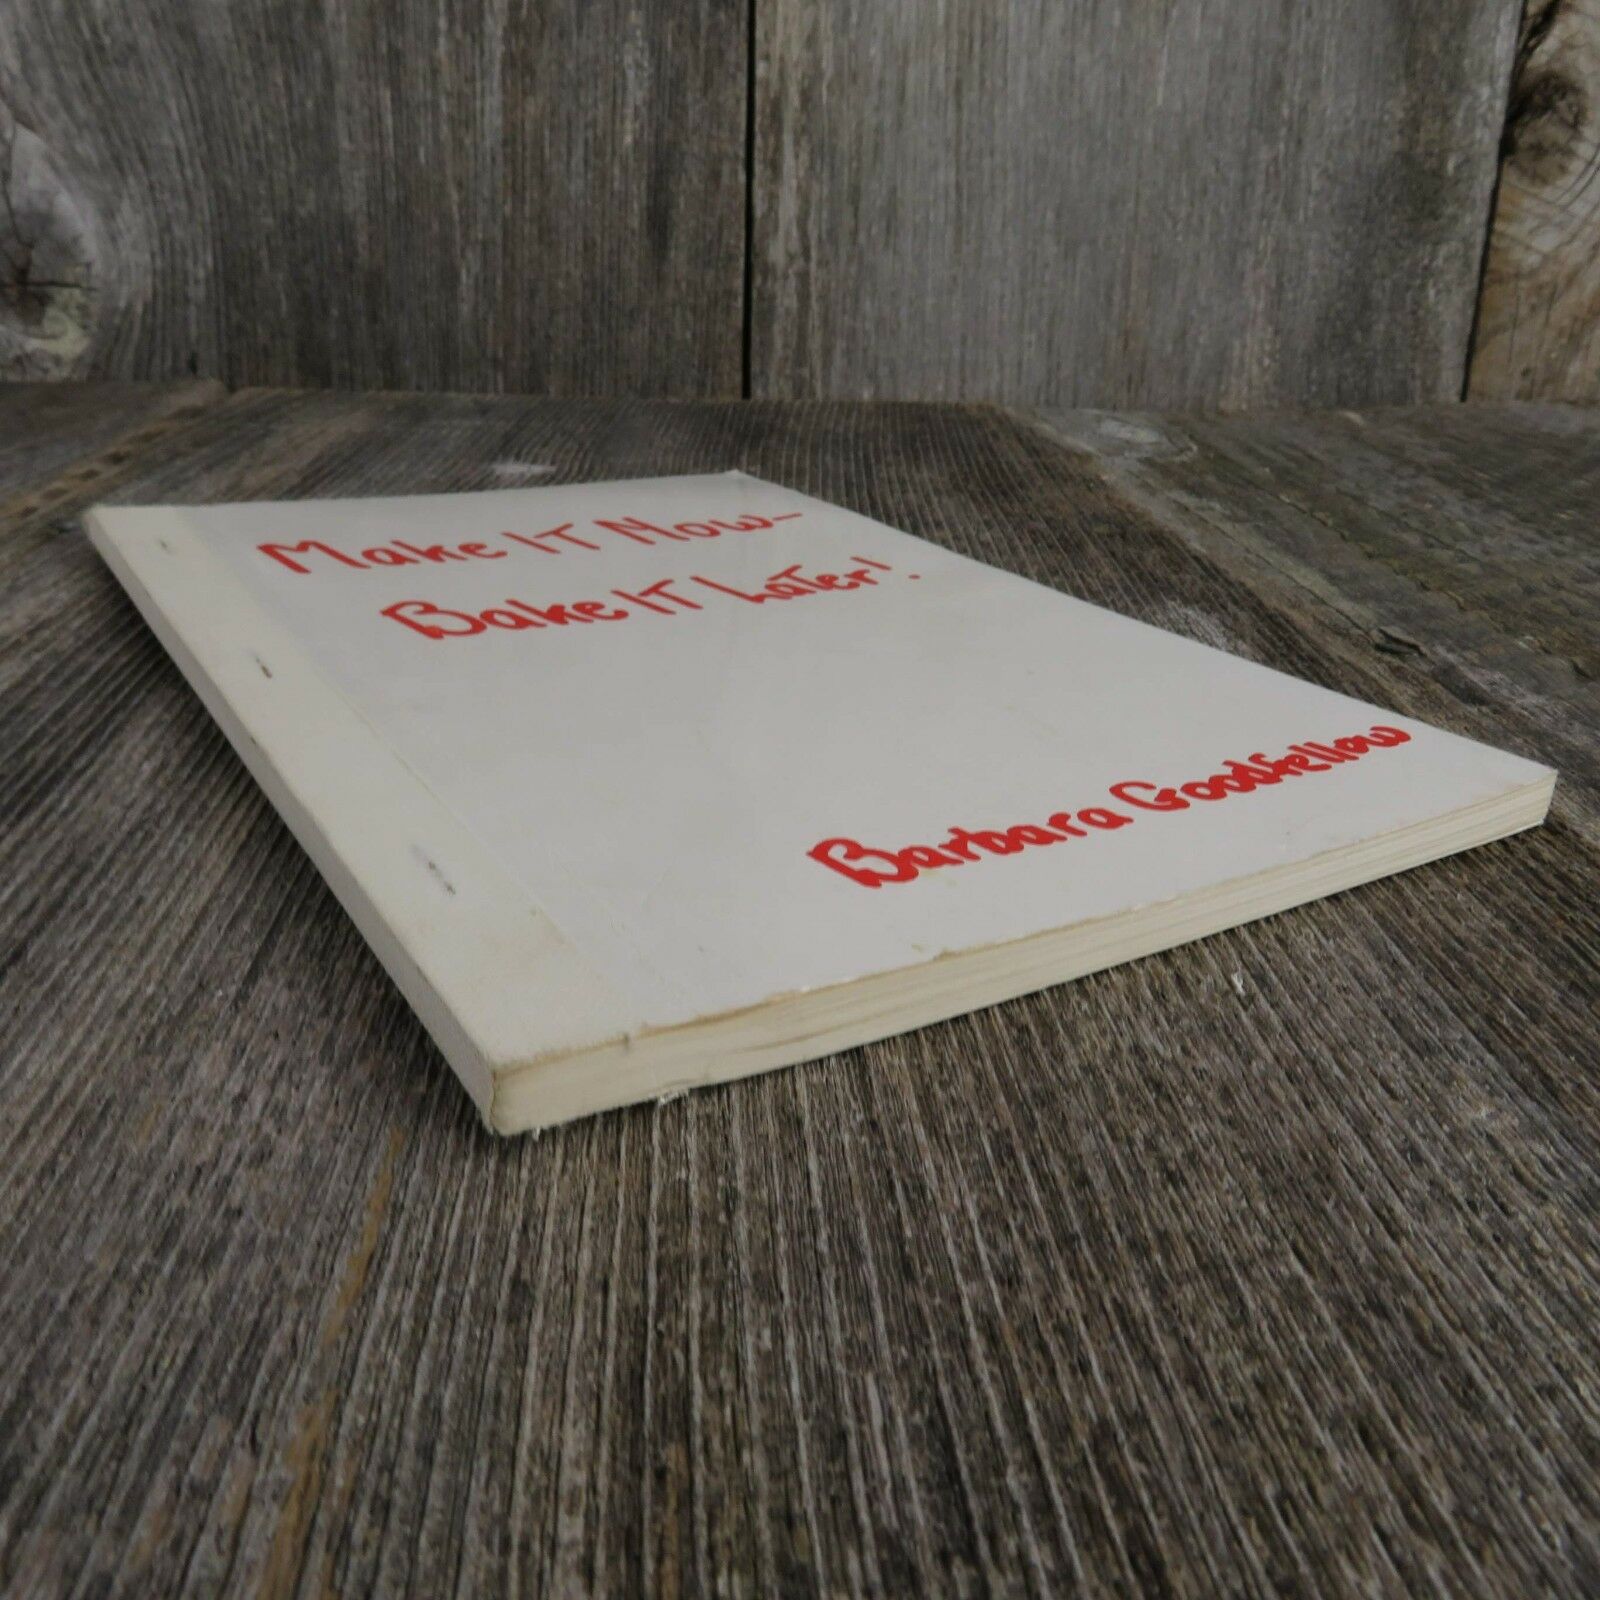 Vintage Cookbook Make It Now Bake it Later Barbara Goodfellow 1958 Handwritten - At Grandma's Table